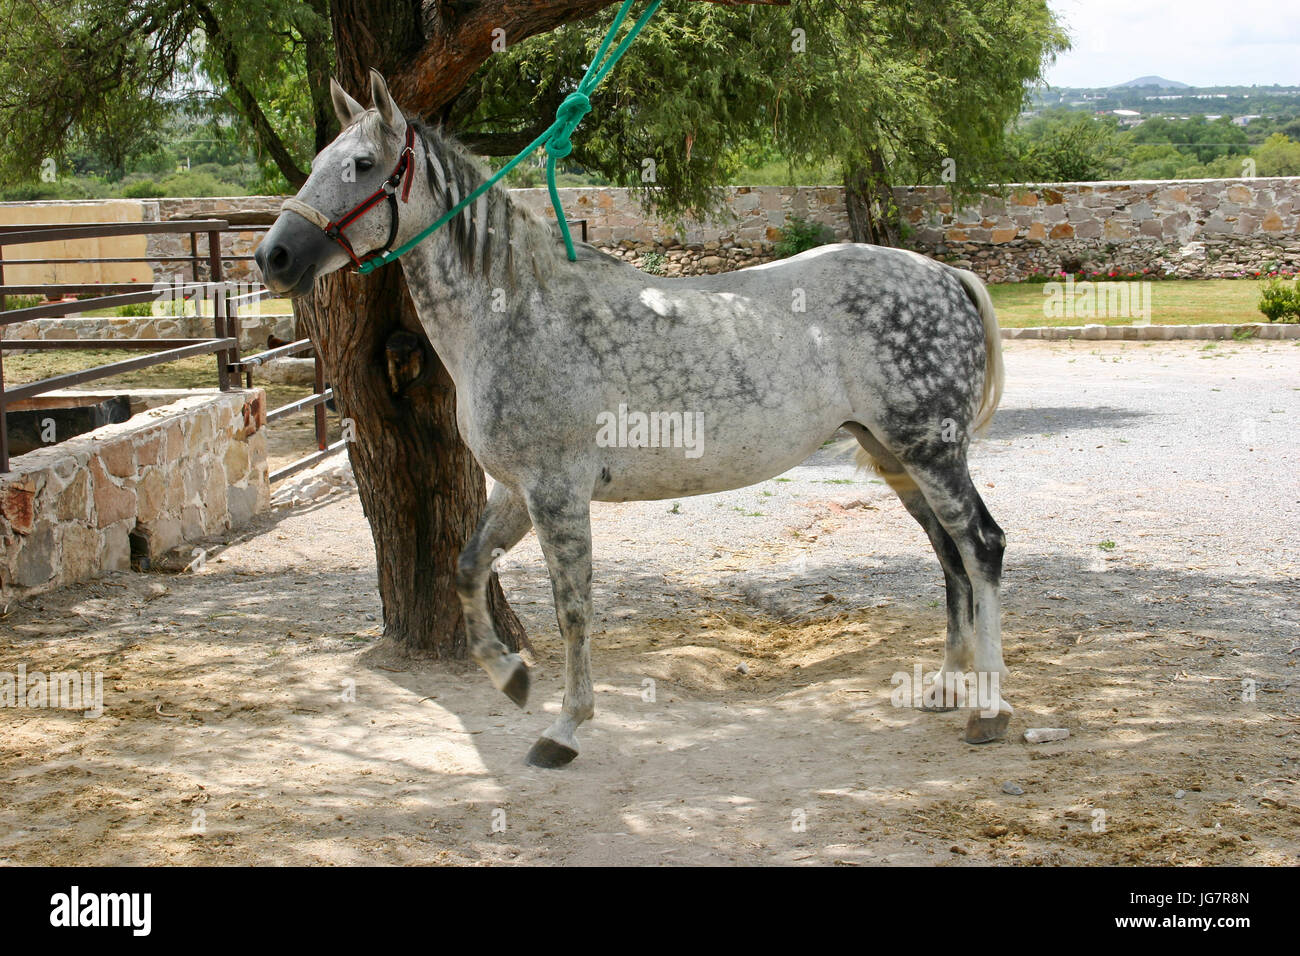 Aztec horse in Mexico Stock Photo